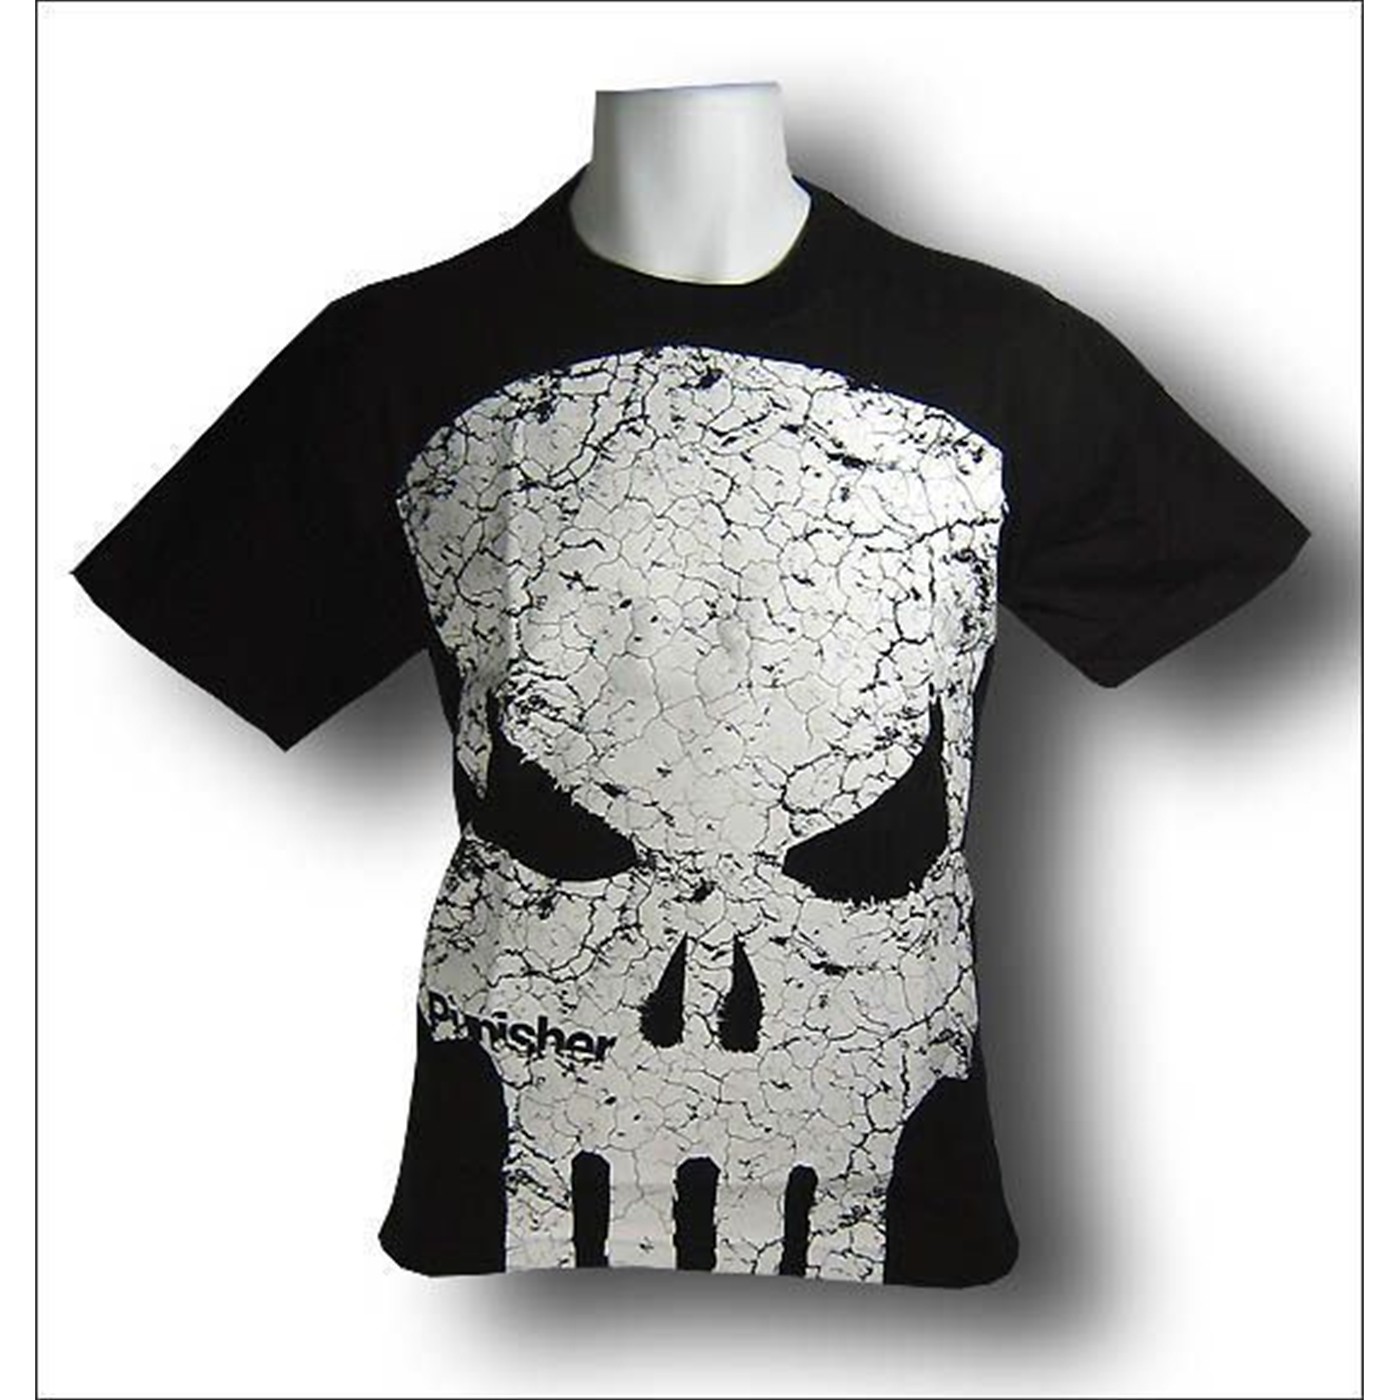 Punisher Cracked Skull Symbol T-Shirt